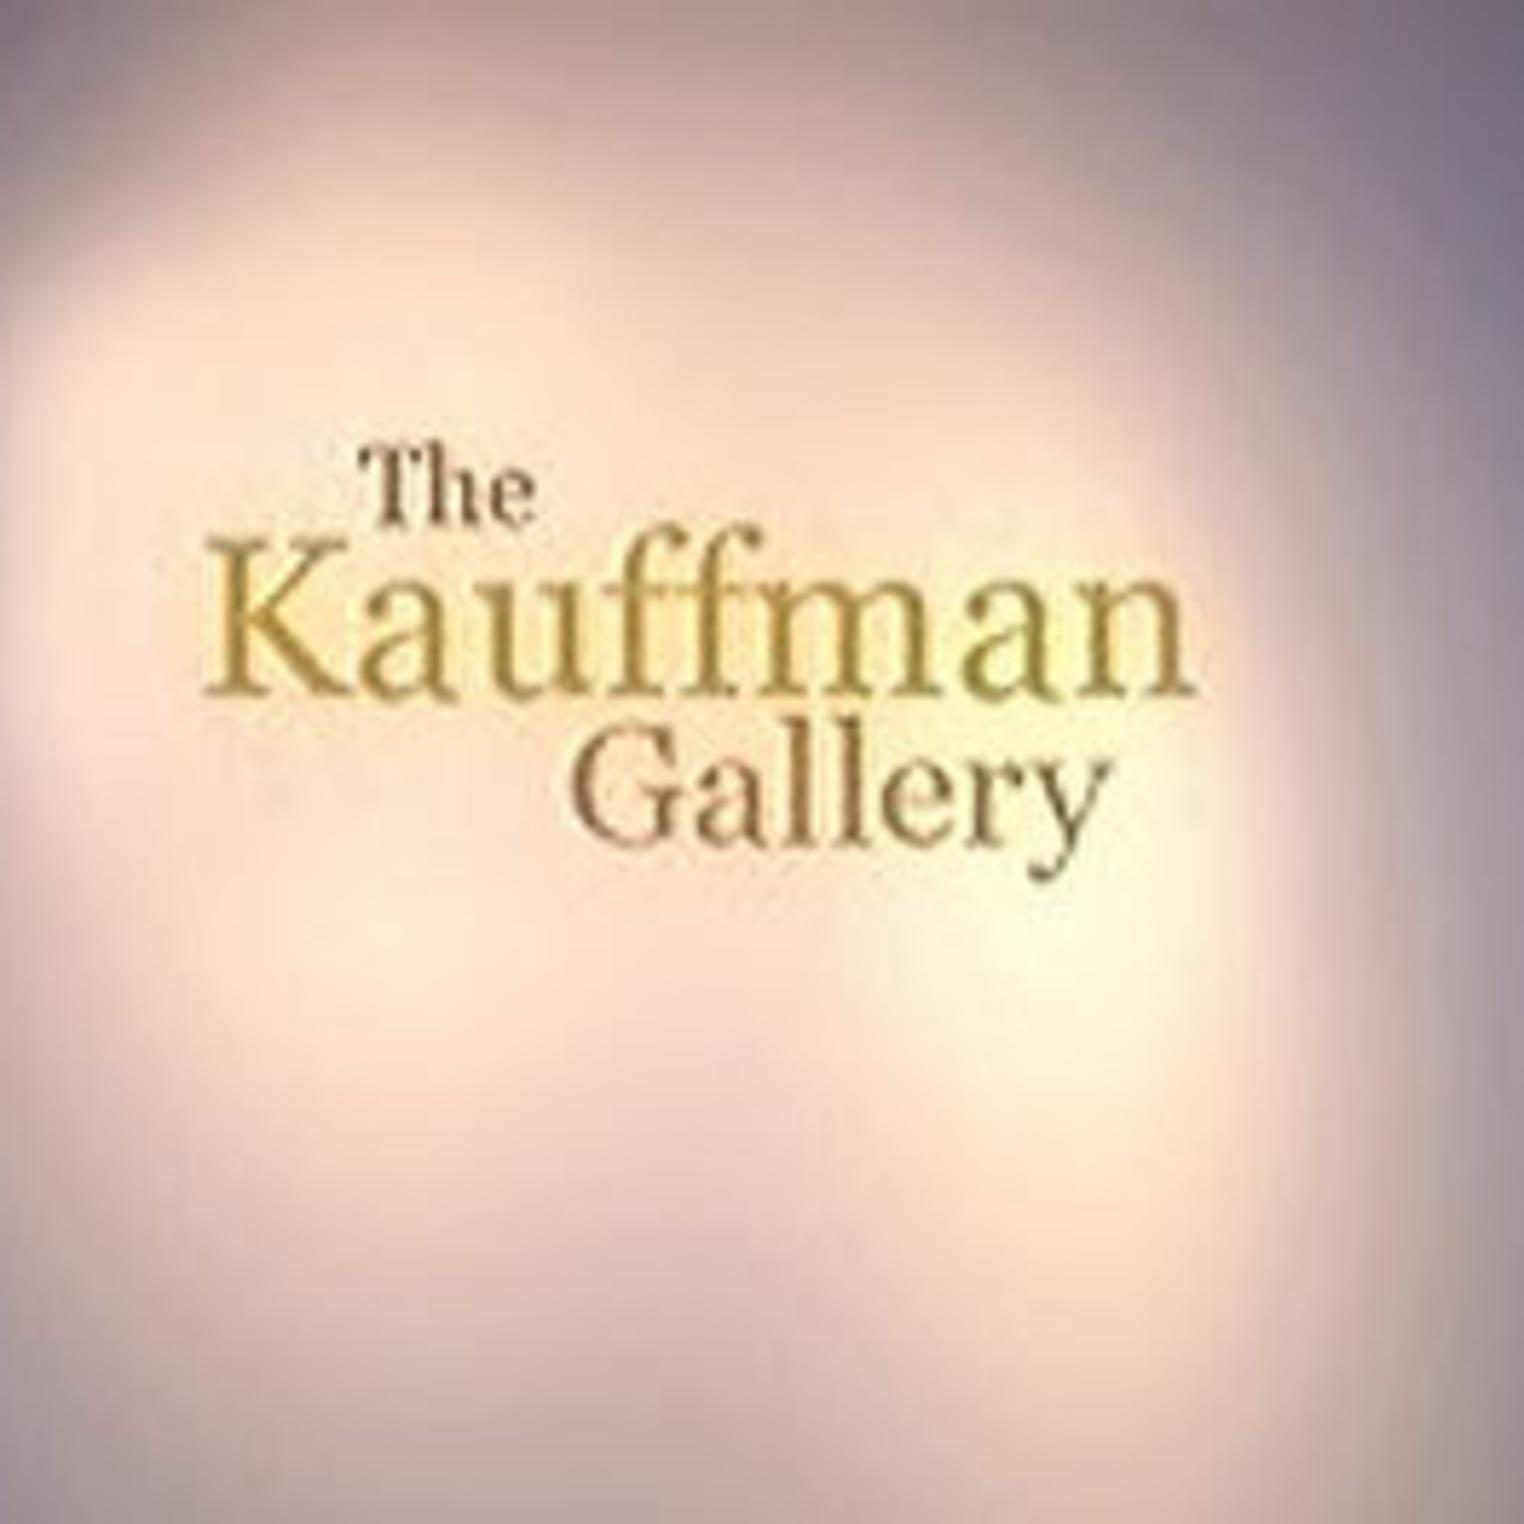 The Kauffman Gallery